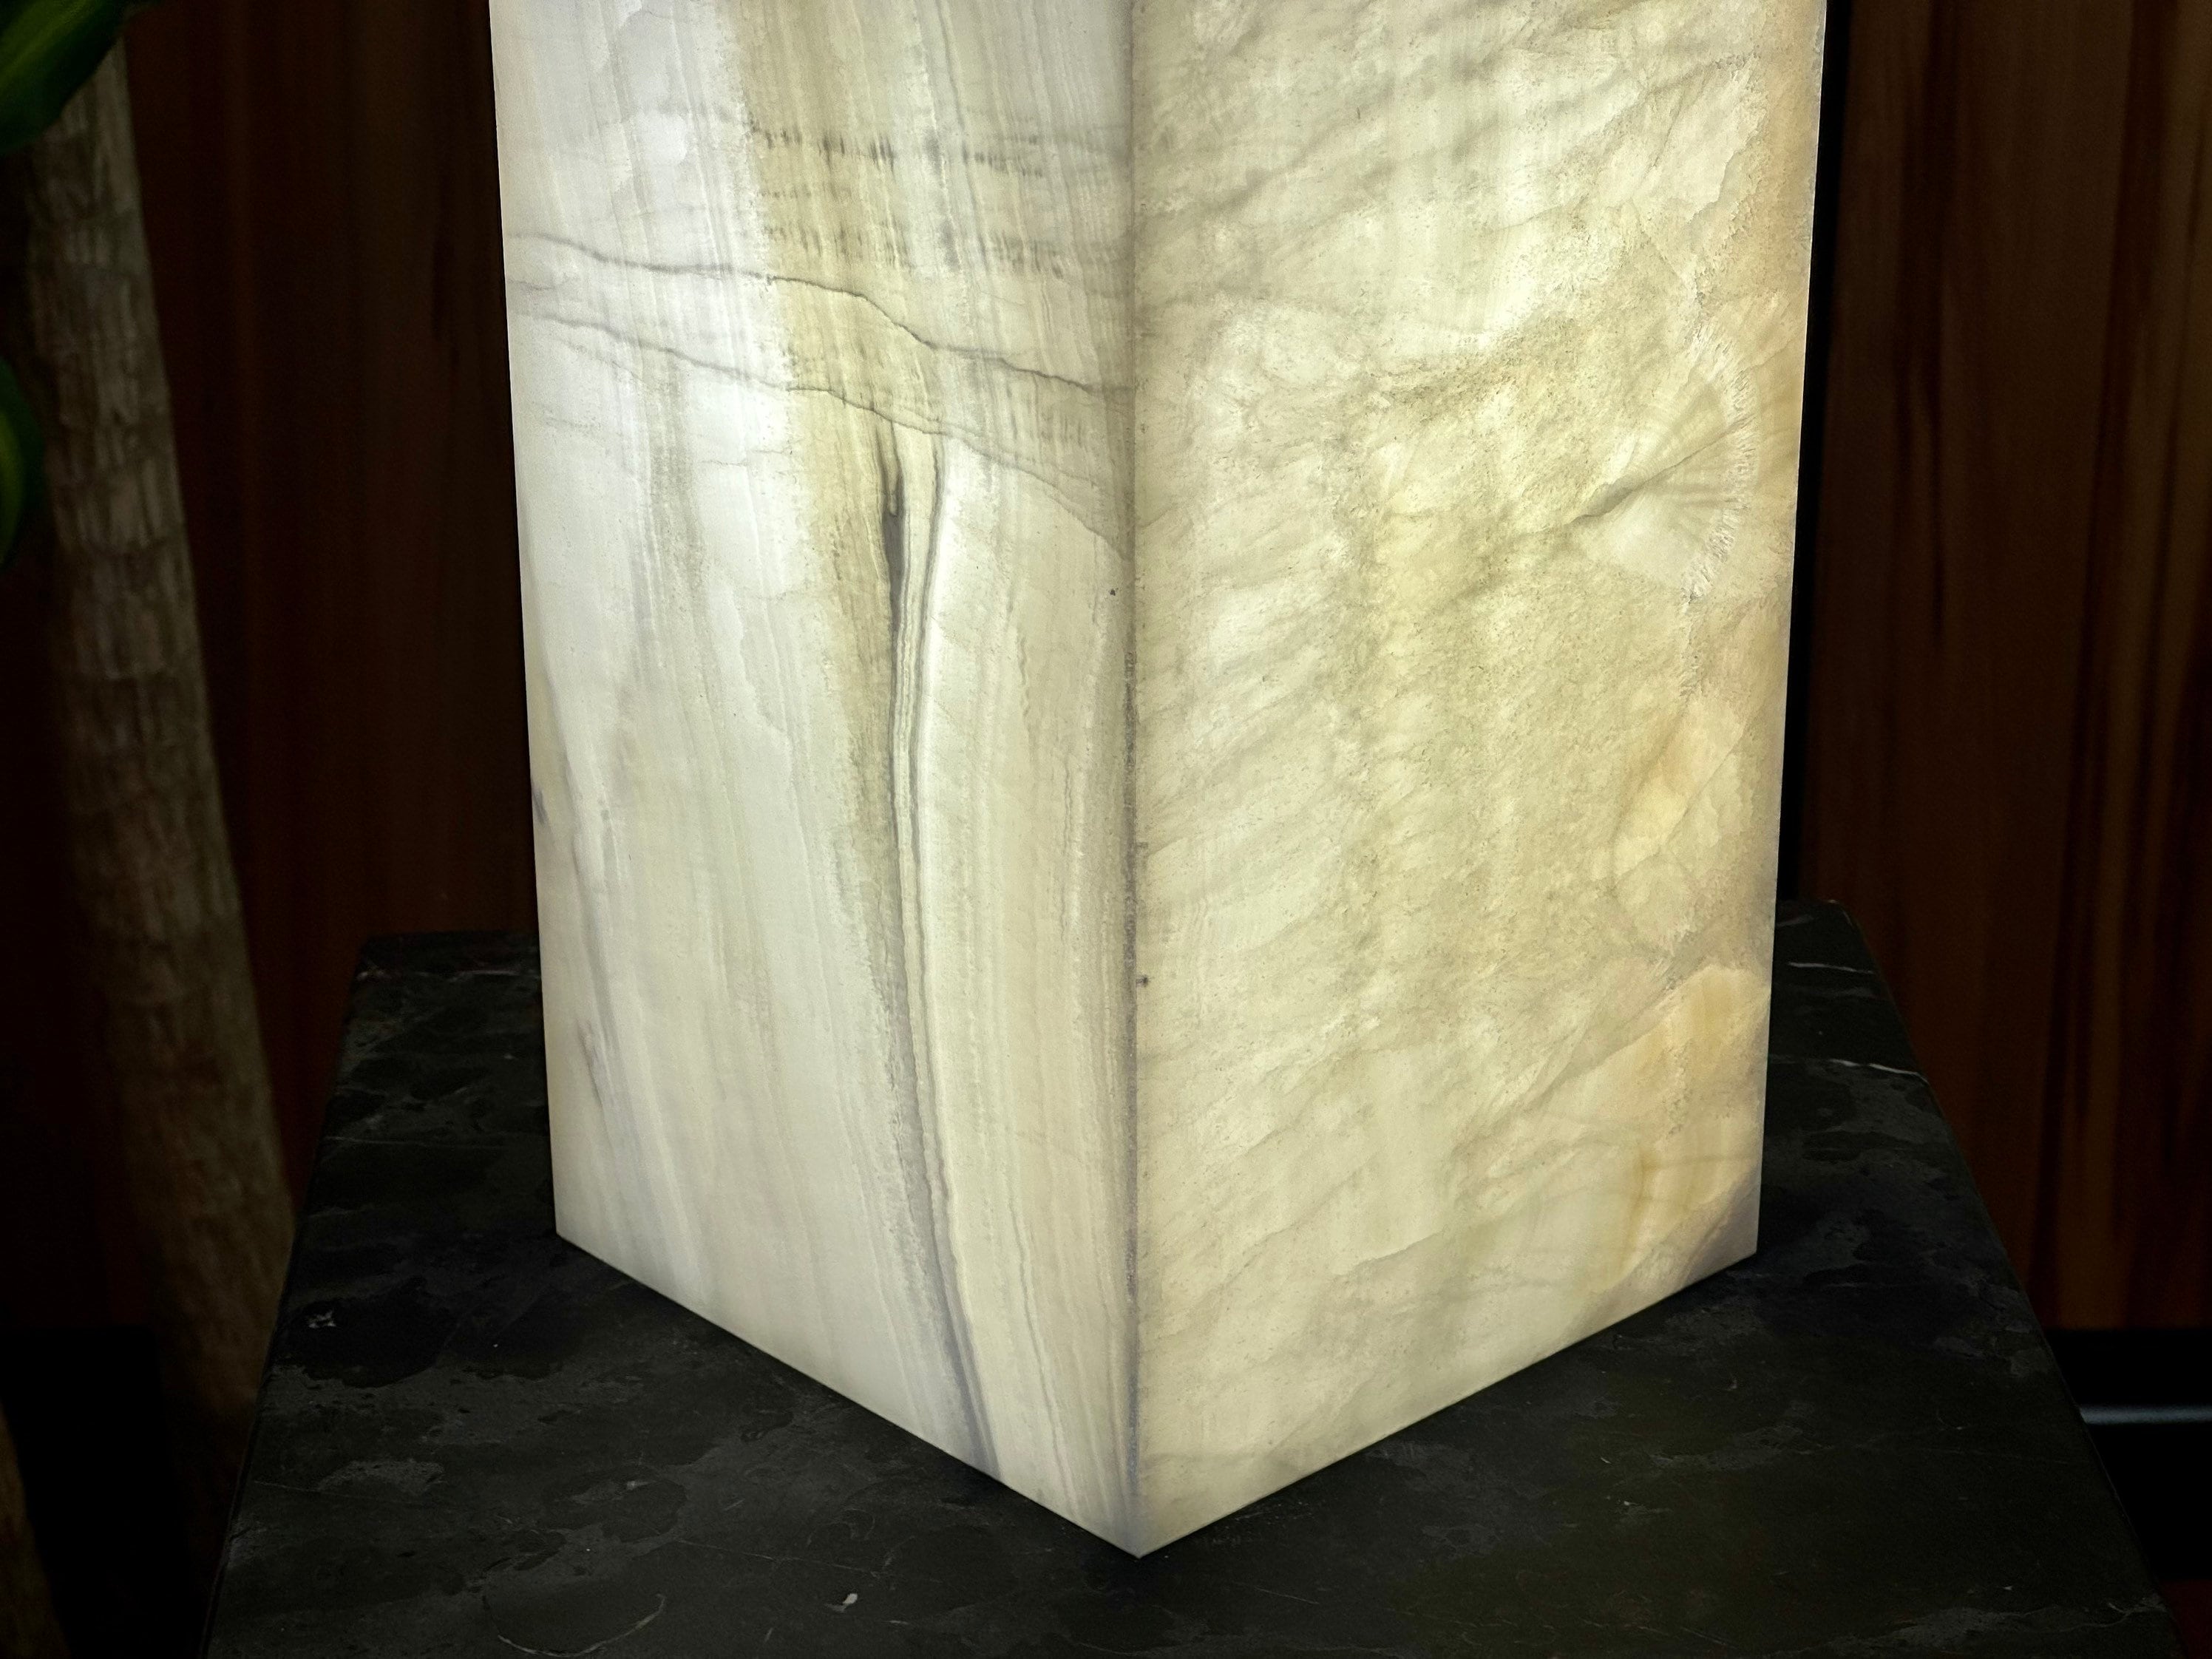 Textured White Onyx Lamp - rectangular Design - Home and Decor - Illuminating Lamp - Salt Lamp